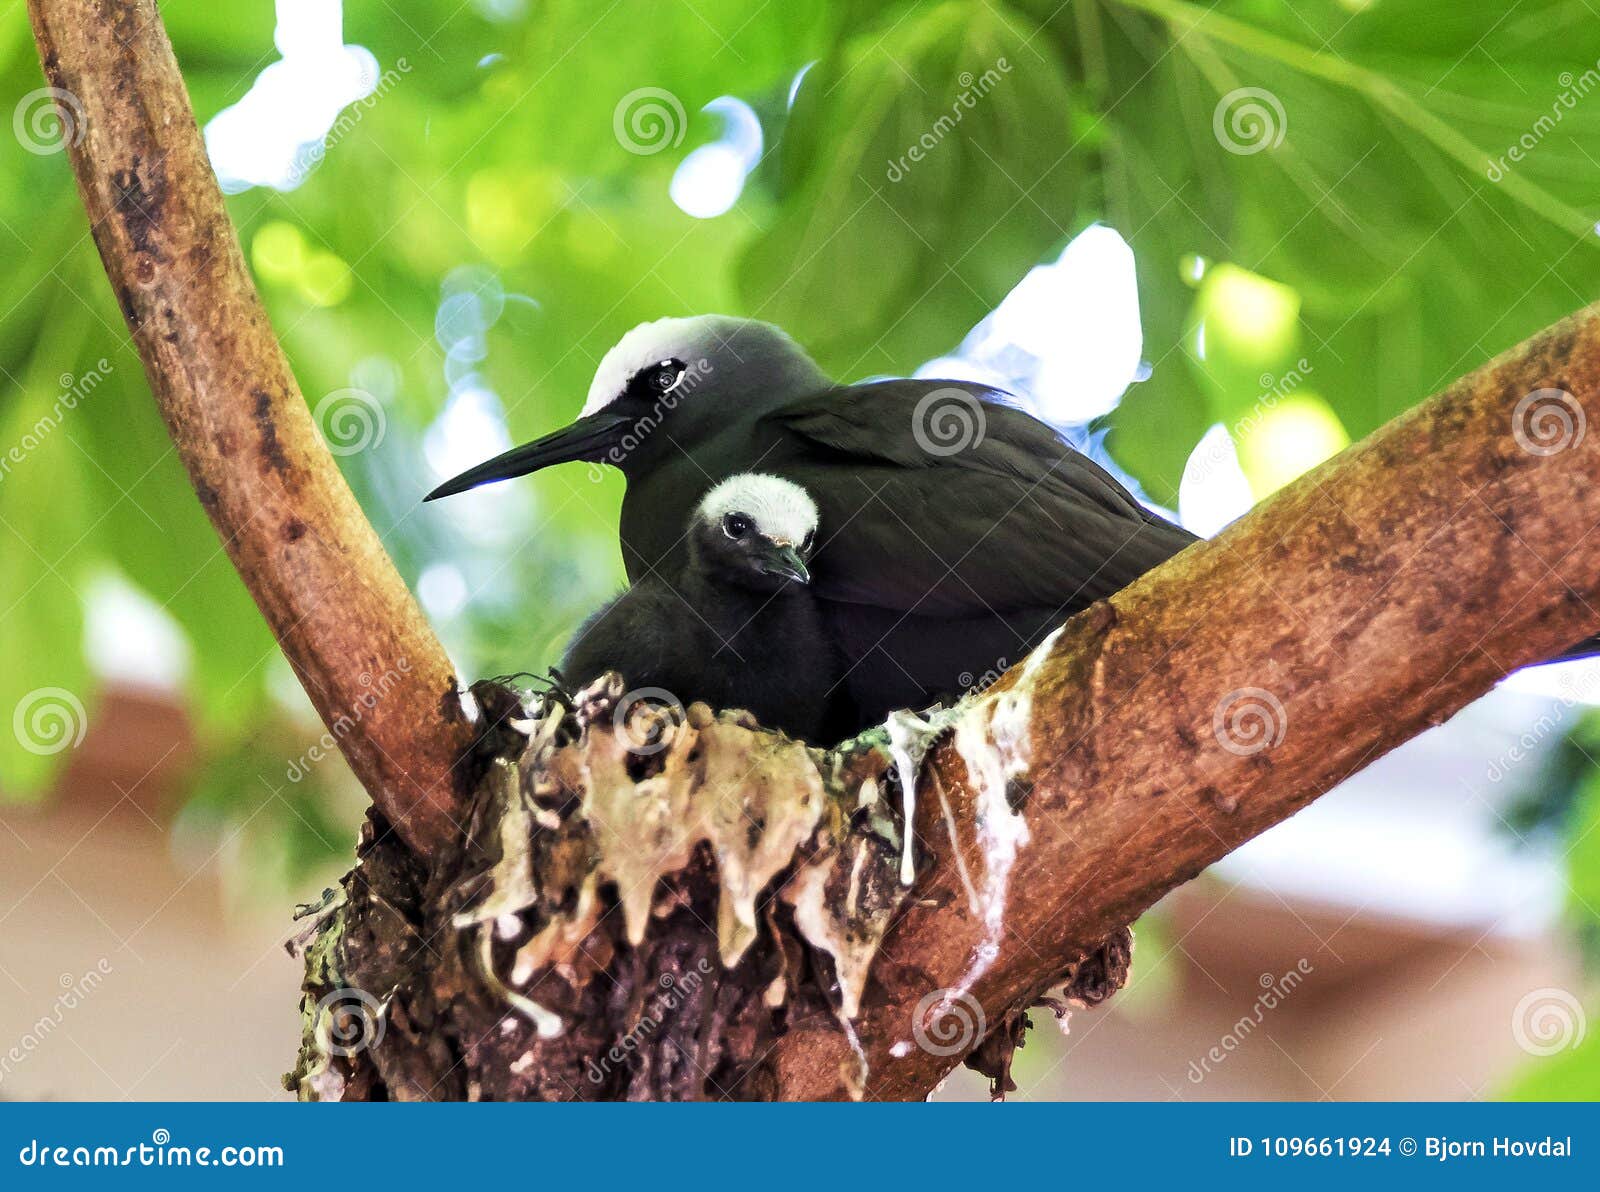 black noddy bird with chick.